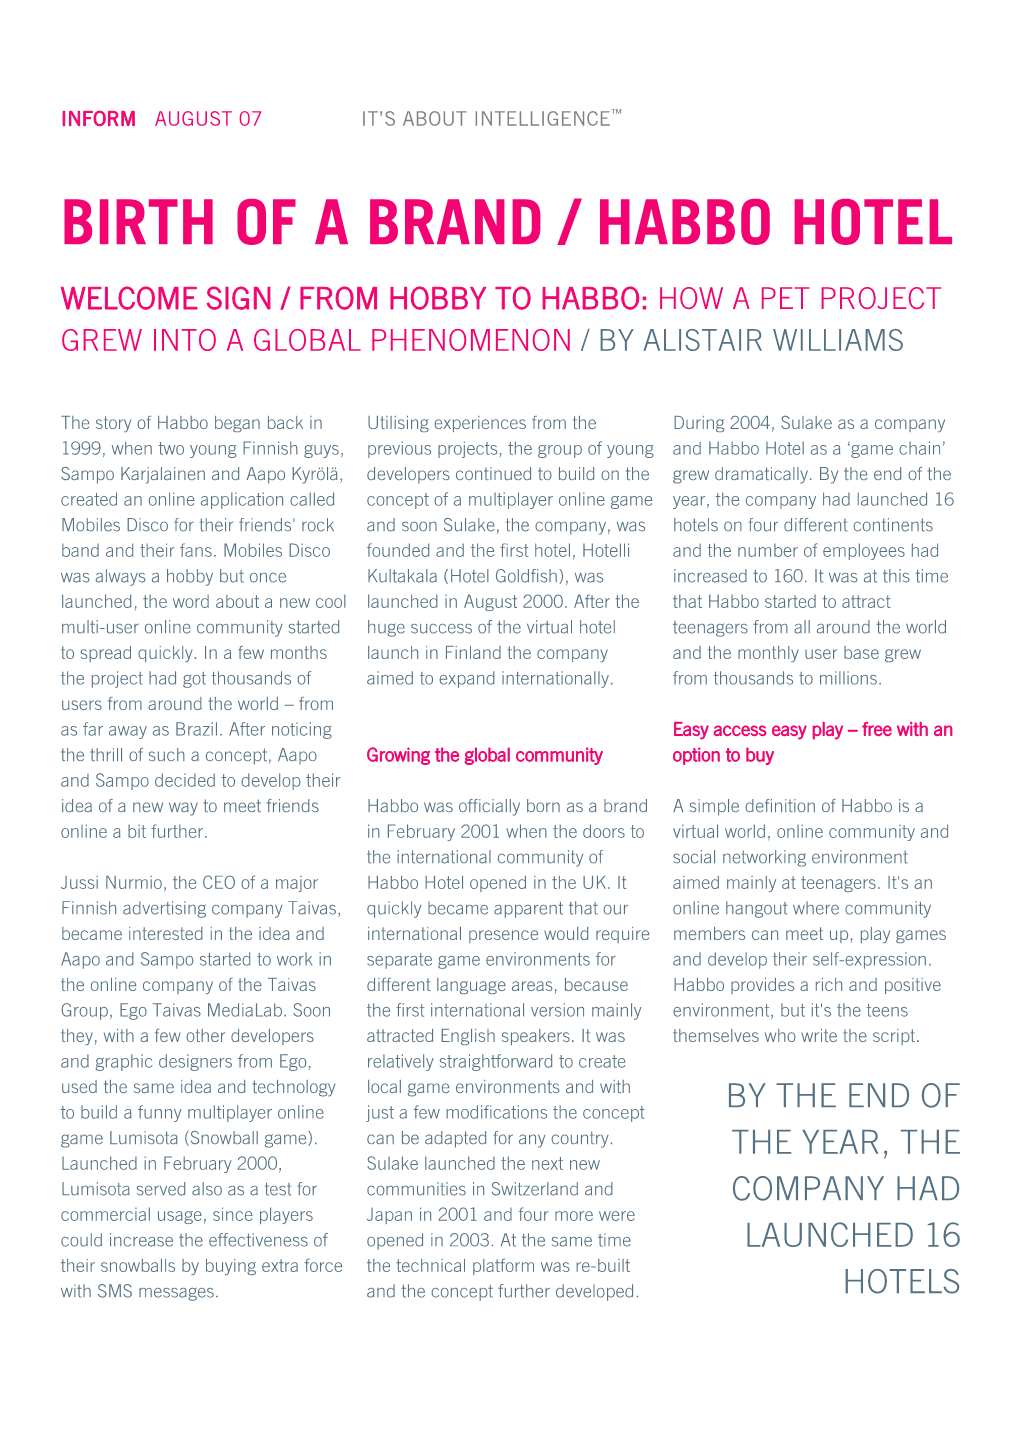 Birth of a Brand / Habbo Hotel